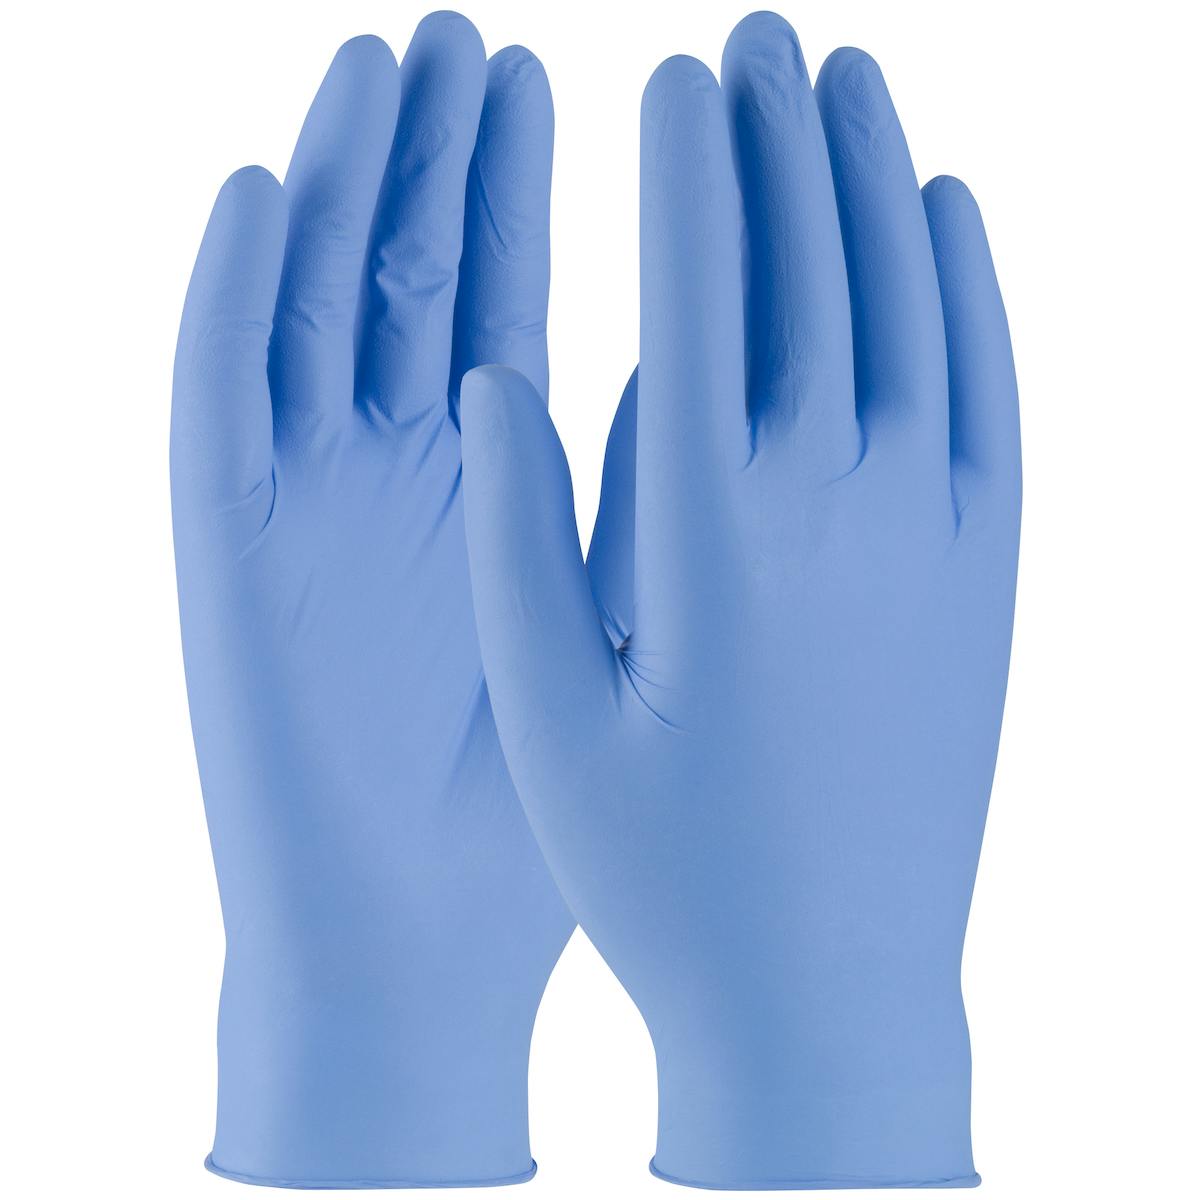 Ambi-dex® Octane Disposable Nitrile Glove, Powder Free with Textured Grip - 3 mil (63-230PF)_1